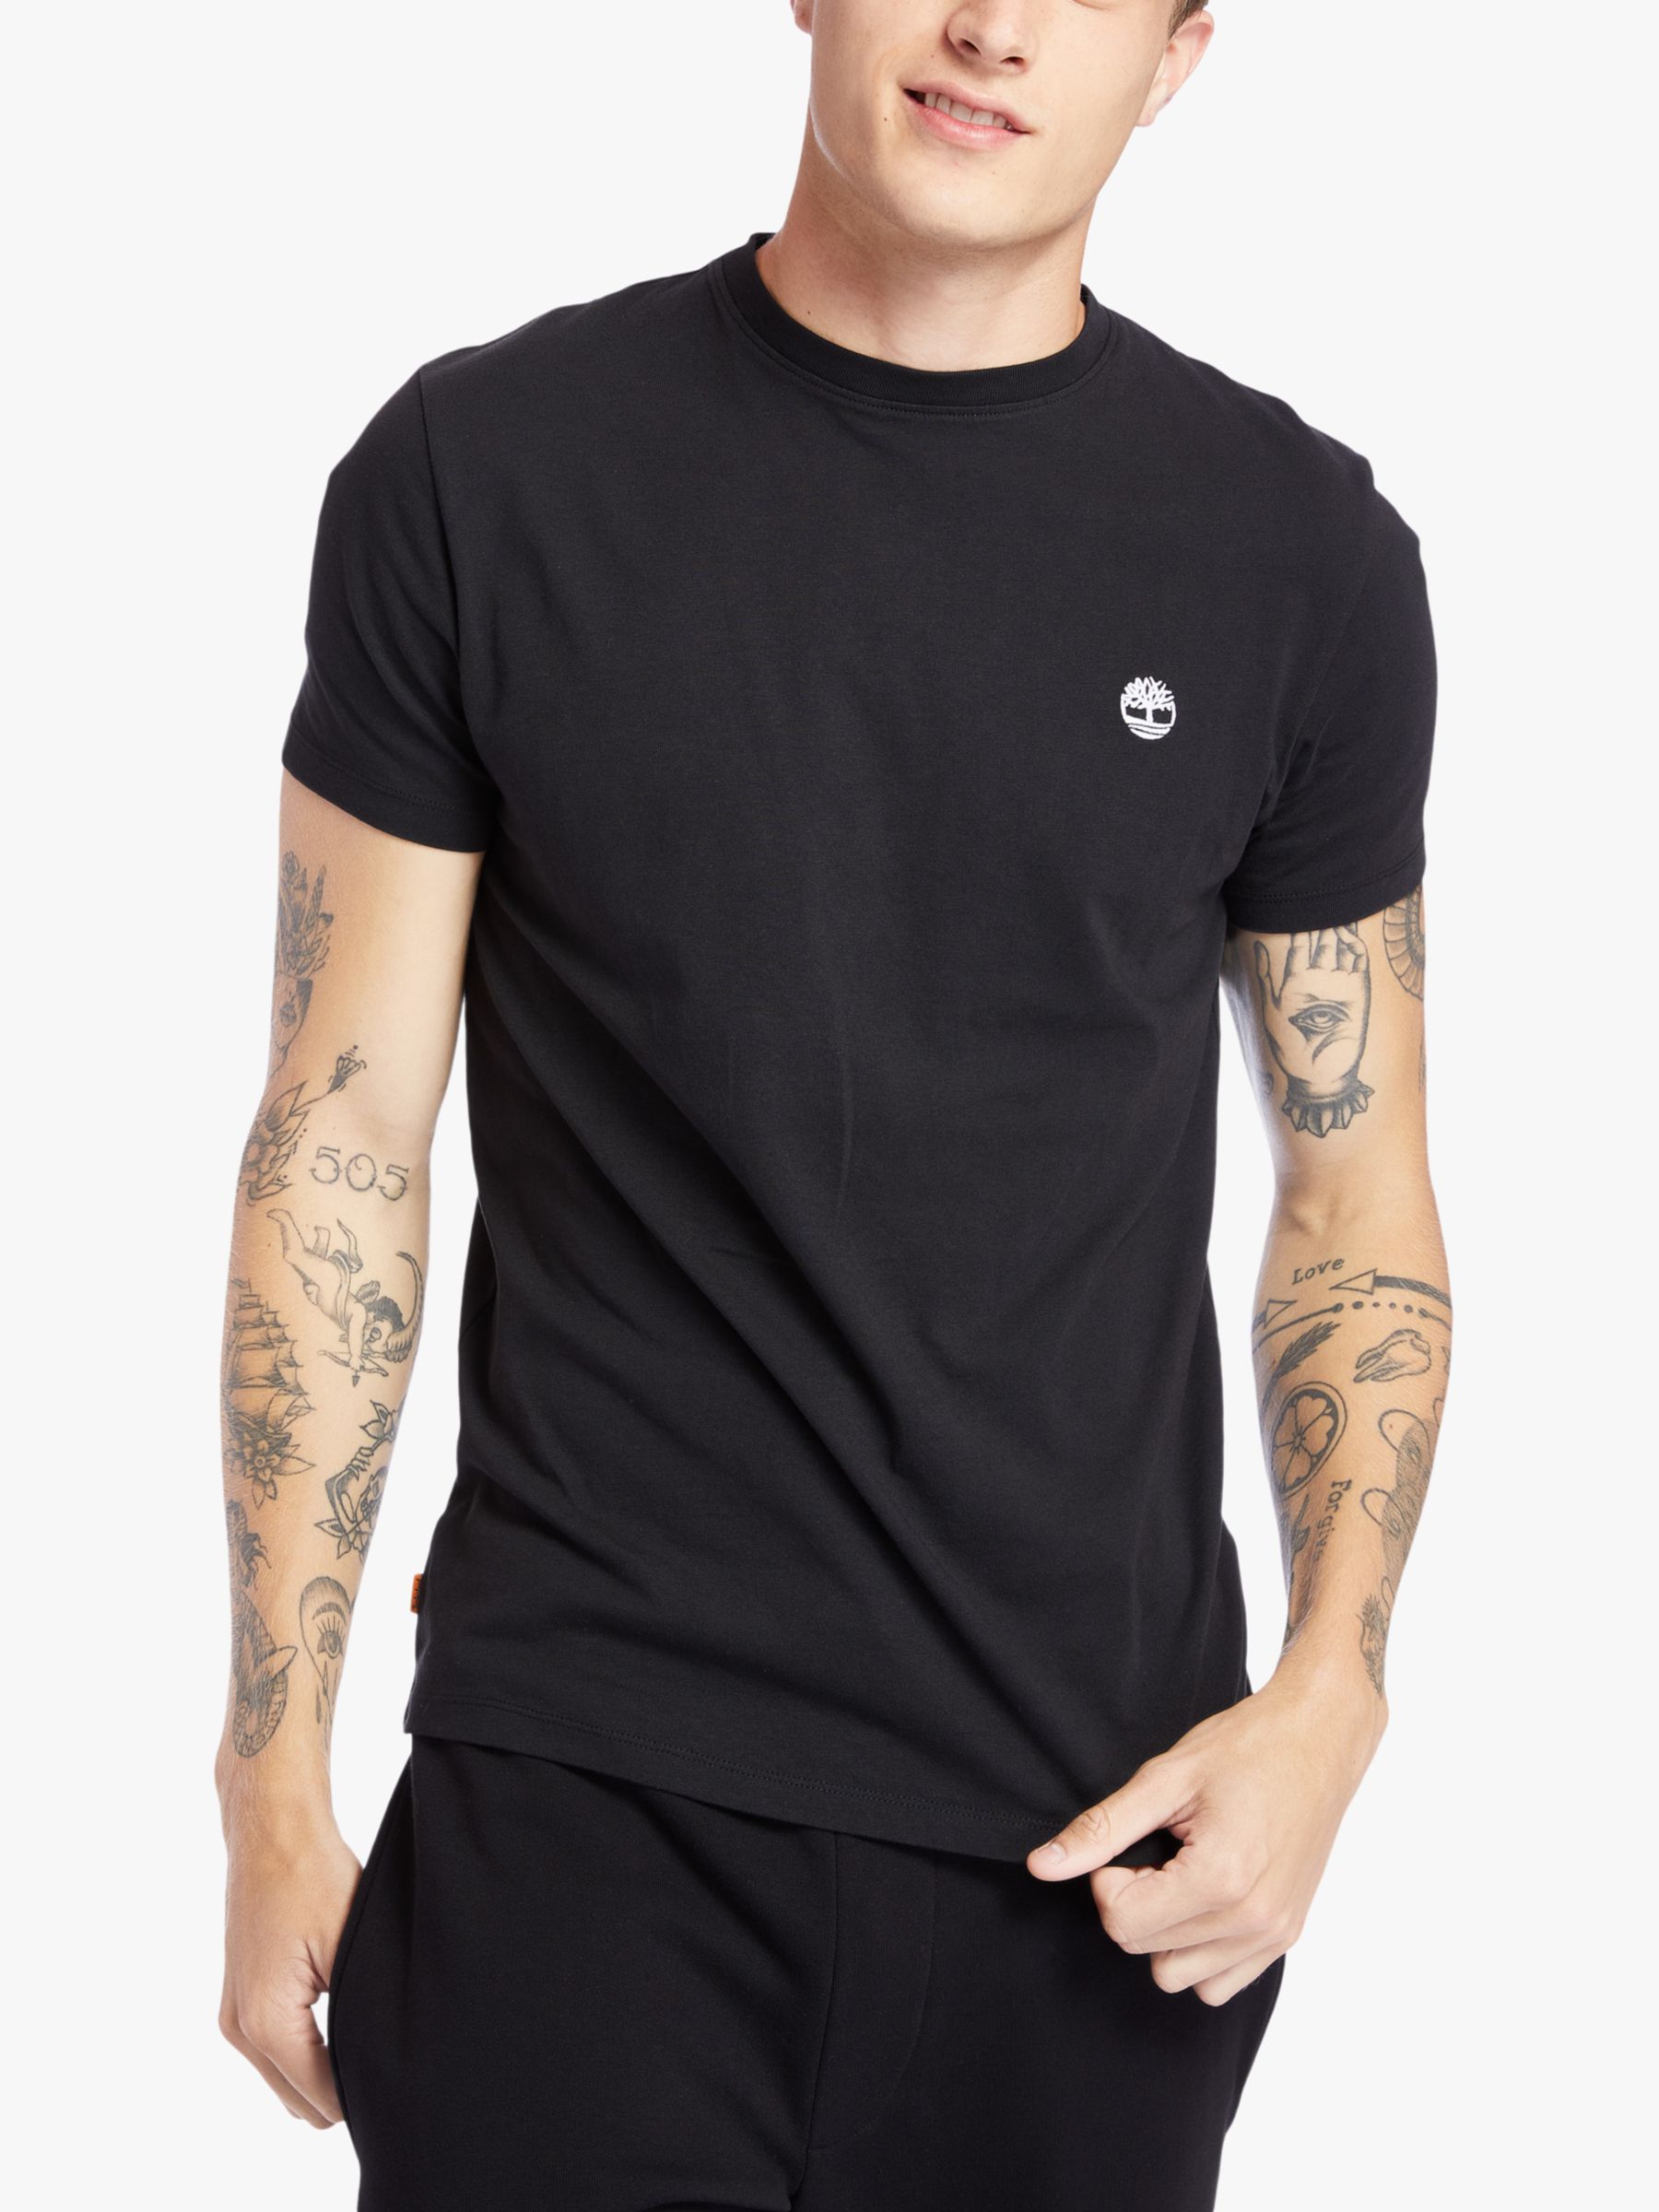 Short Dunstan Timberland River S T-Shirt, Black, Sleeve